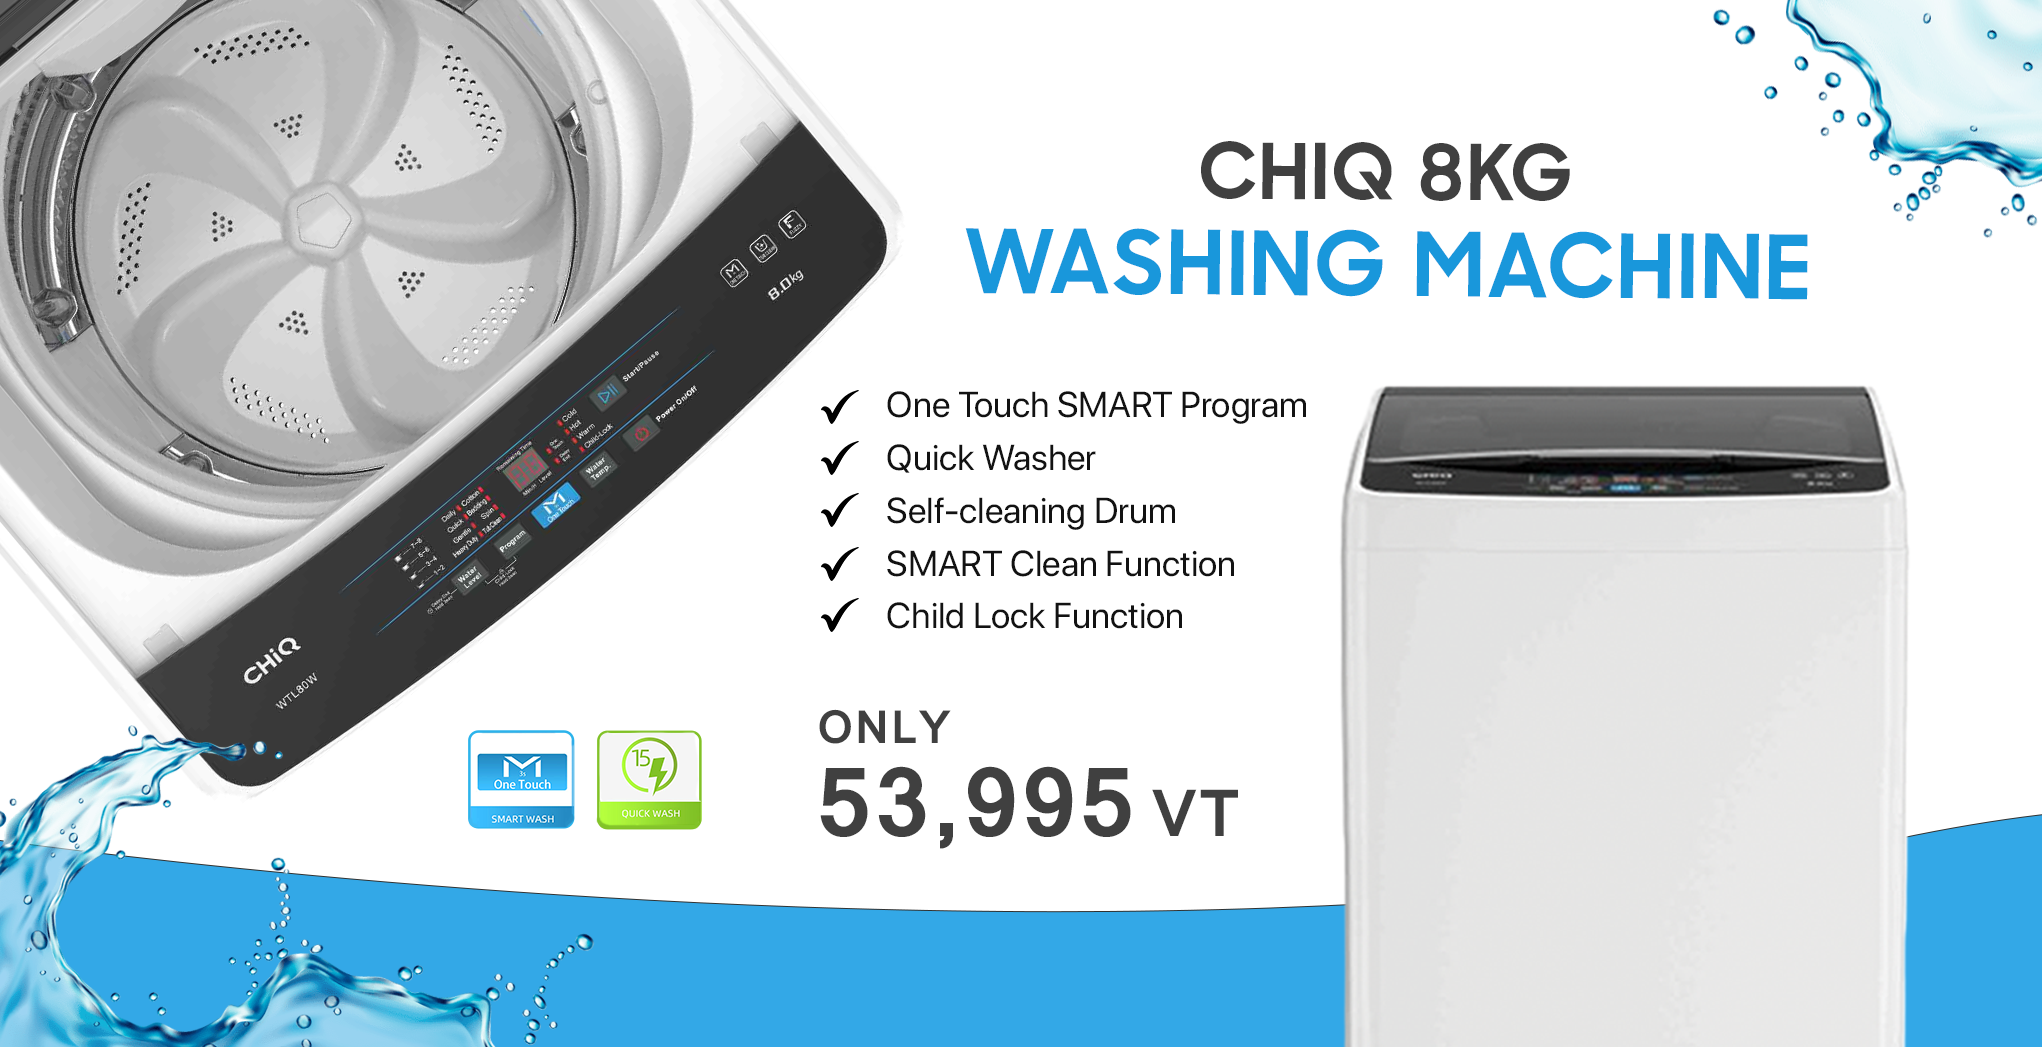 chiq-8kg-washing-machine-website-.png